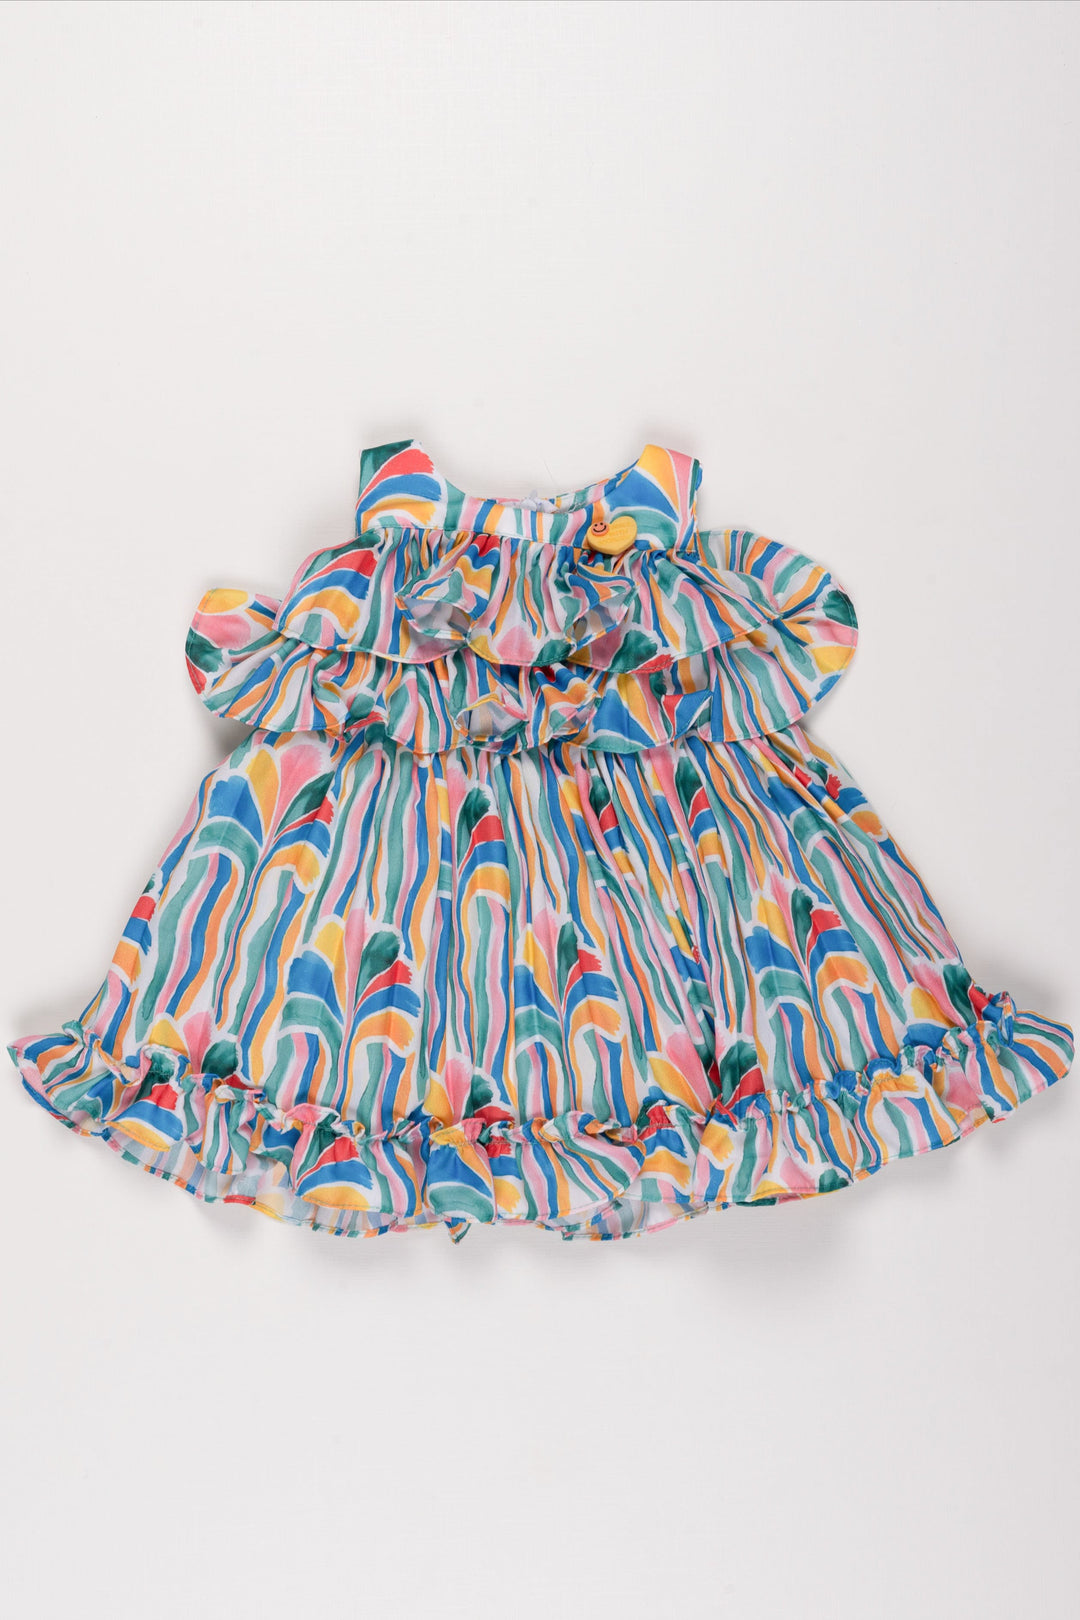 The Nesavu Baby Fancy Frock Rainbow Striped Ruffle Baby Frock for Girls Nesavu 12 (3M) / Blue BFJ506B-12 Girls Rainbow Stripe Dress | Colorful Ruffle Summer Dress | The Nesavu